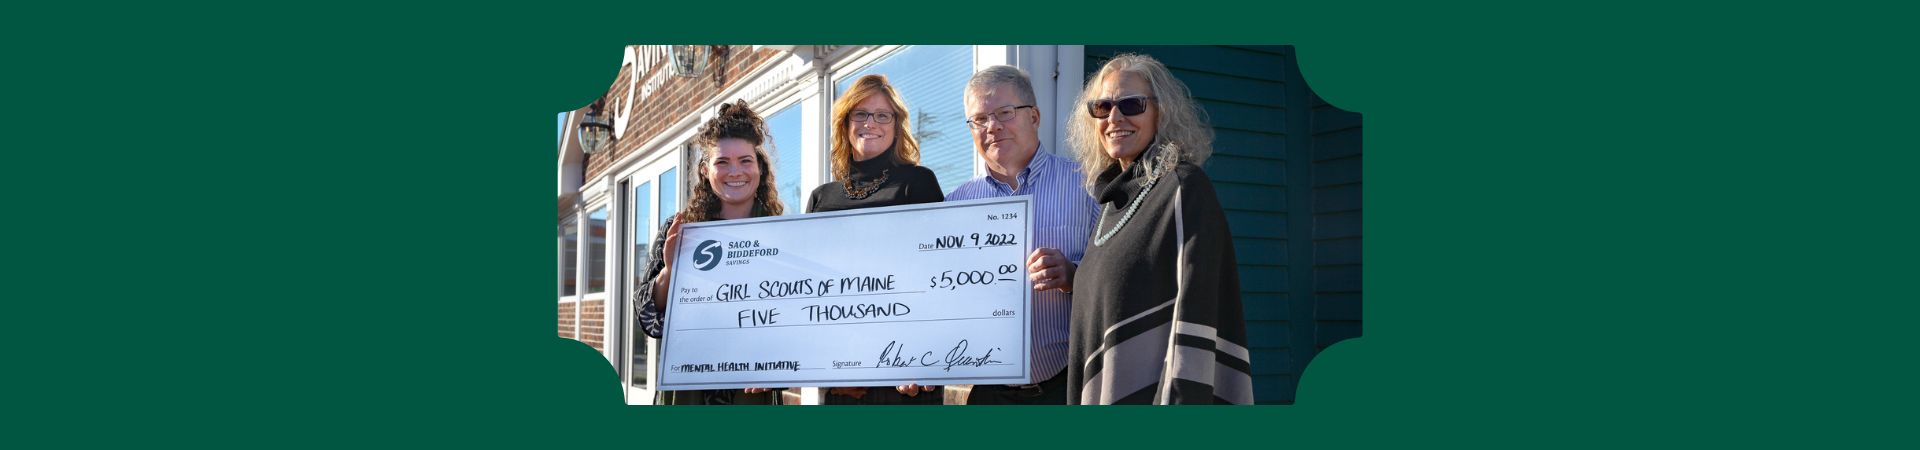  Saco Biddeford Savings employees giving giant check to GSME employees 